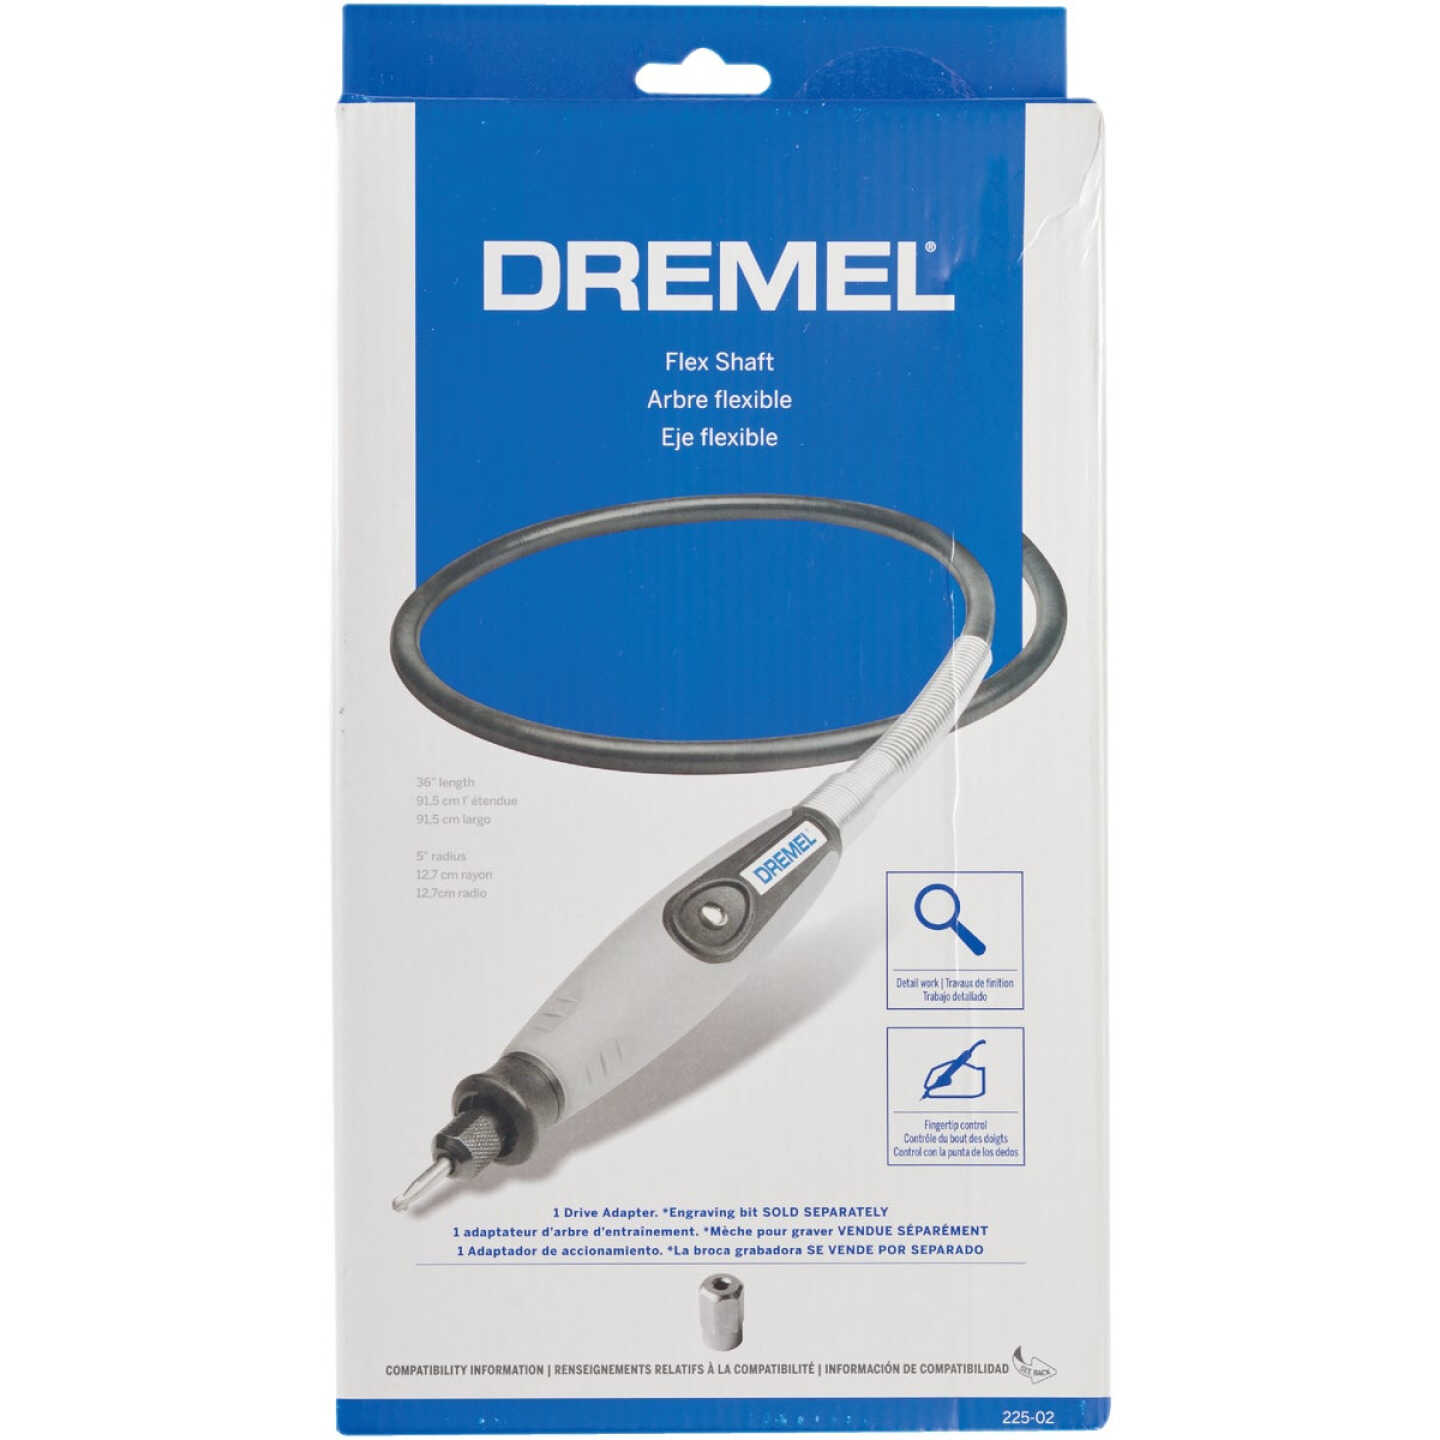 Dremel - Flexible Shaft